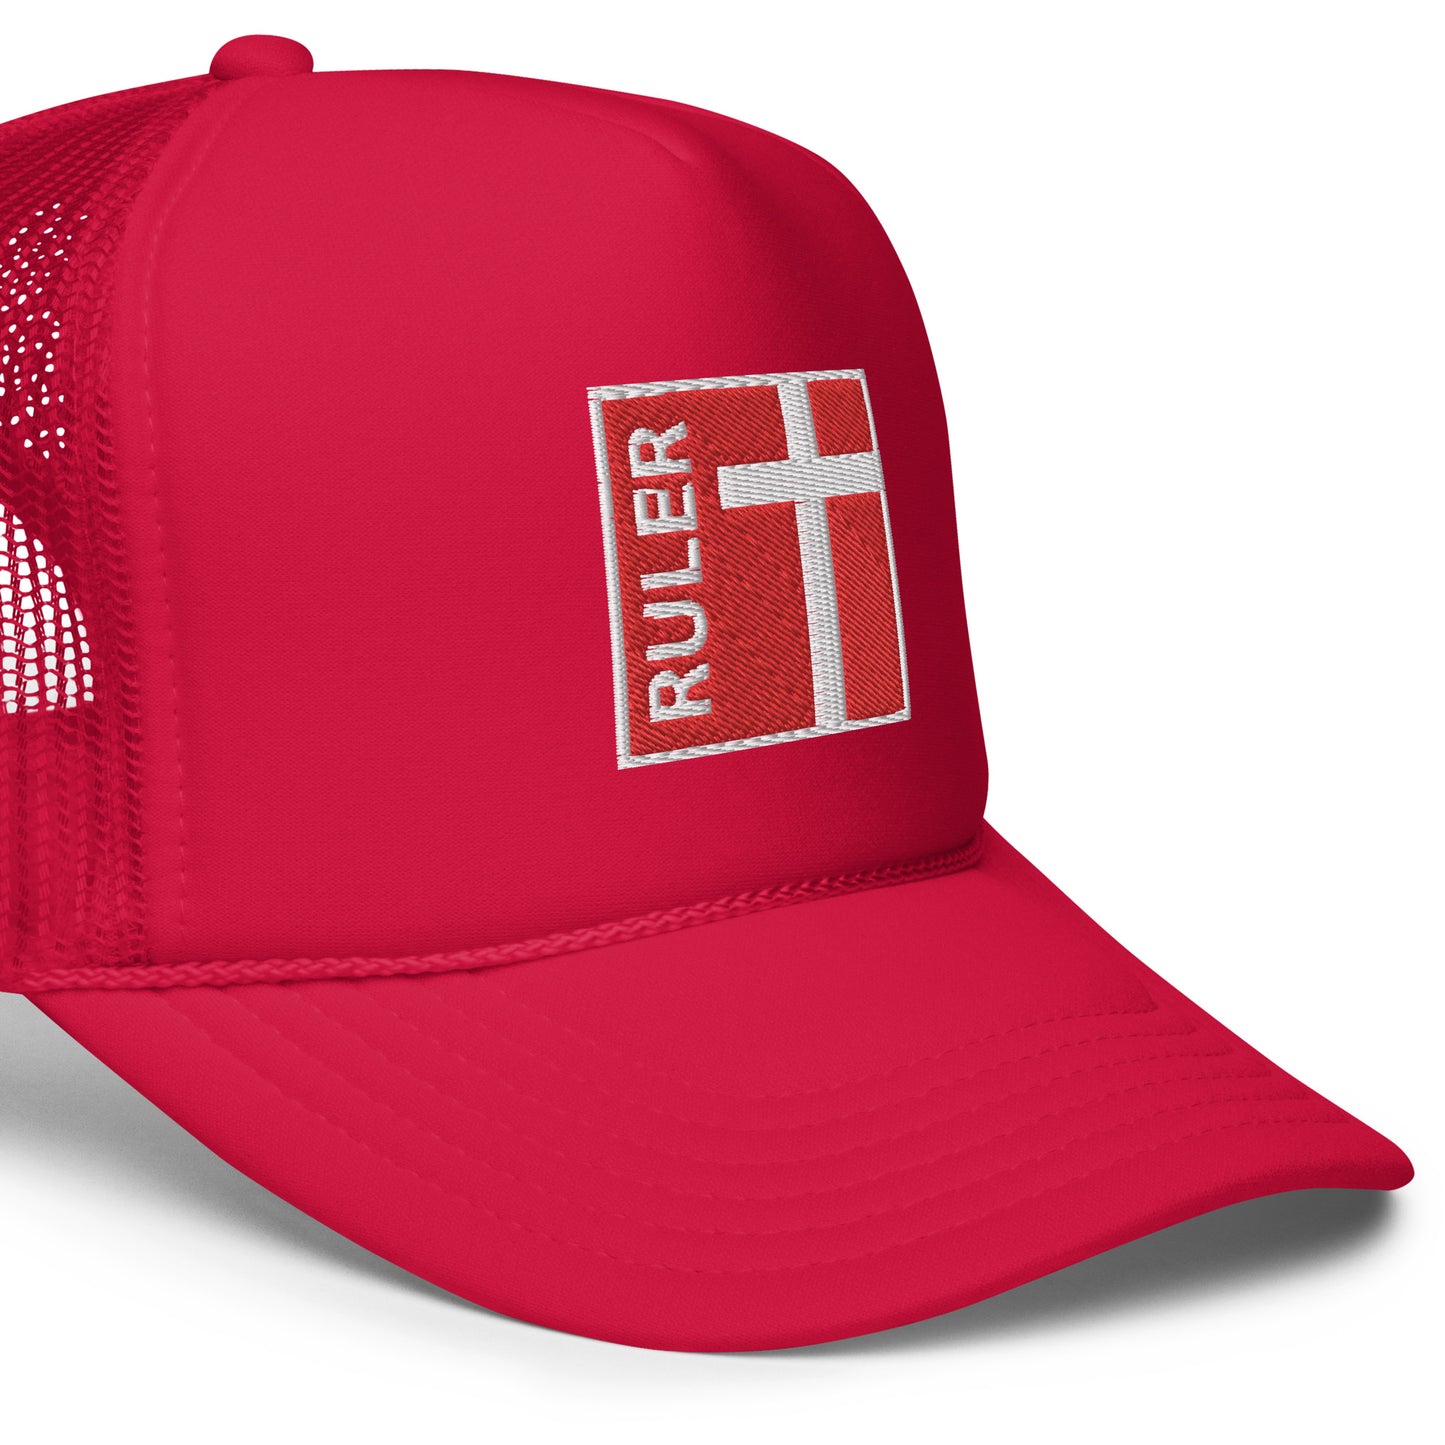 "CHRIST IS MY RULER" FOAM TRUCKER HAT - RED N' WHITE